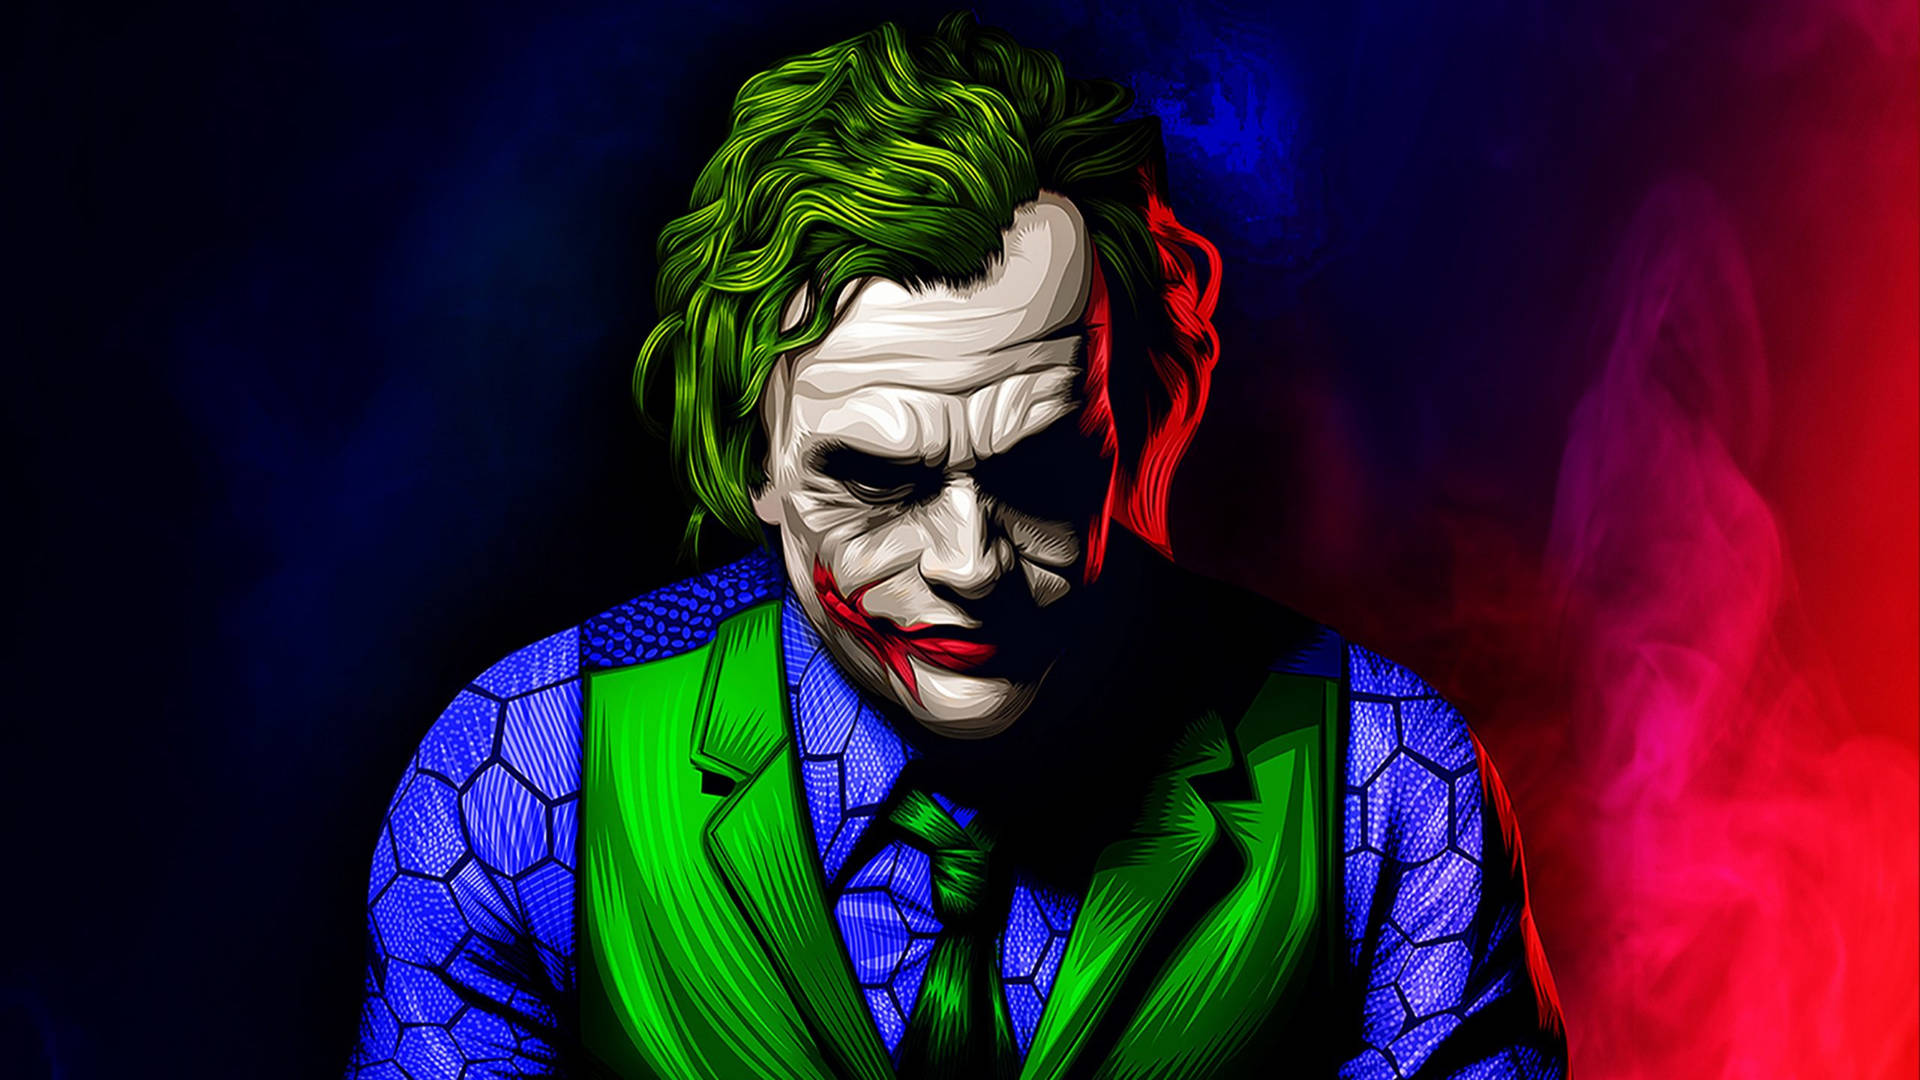 Joker 5120X2880 Wallpaper and Background Image